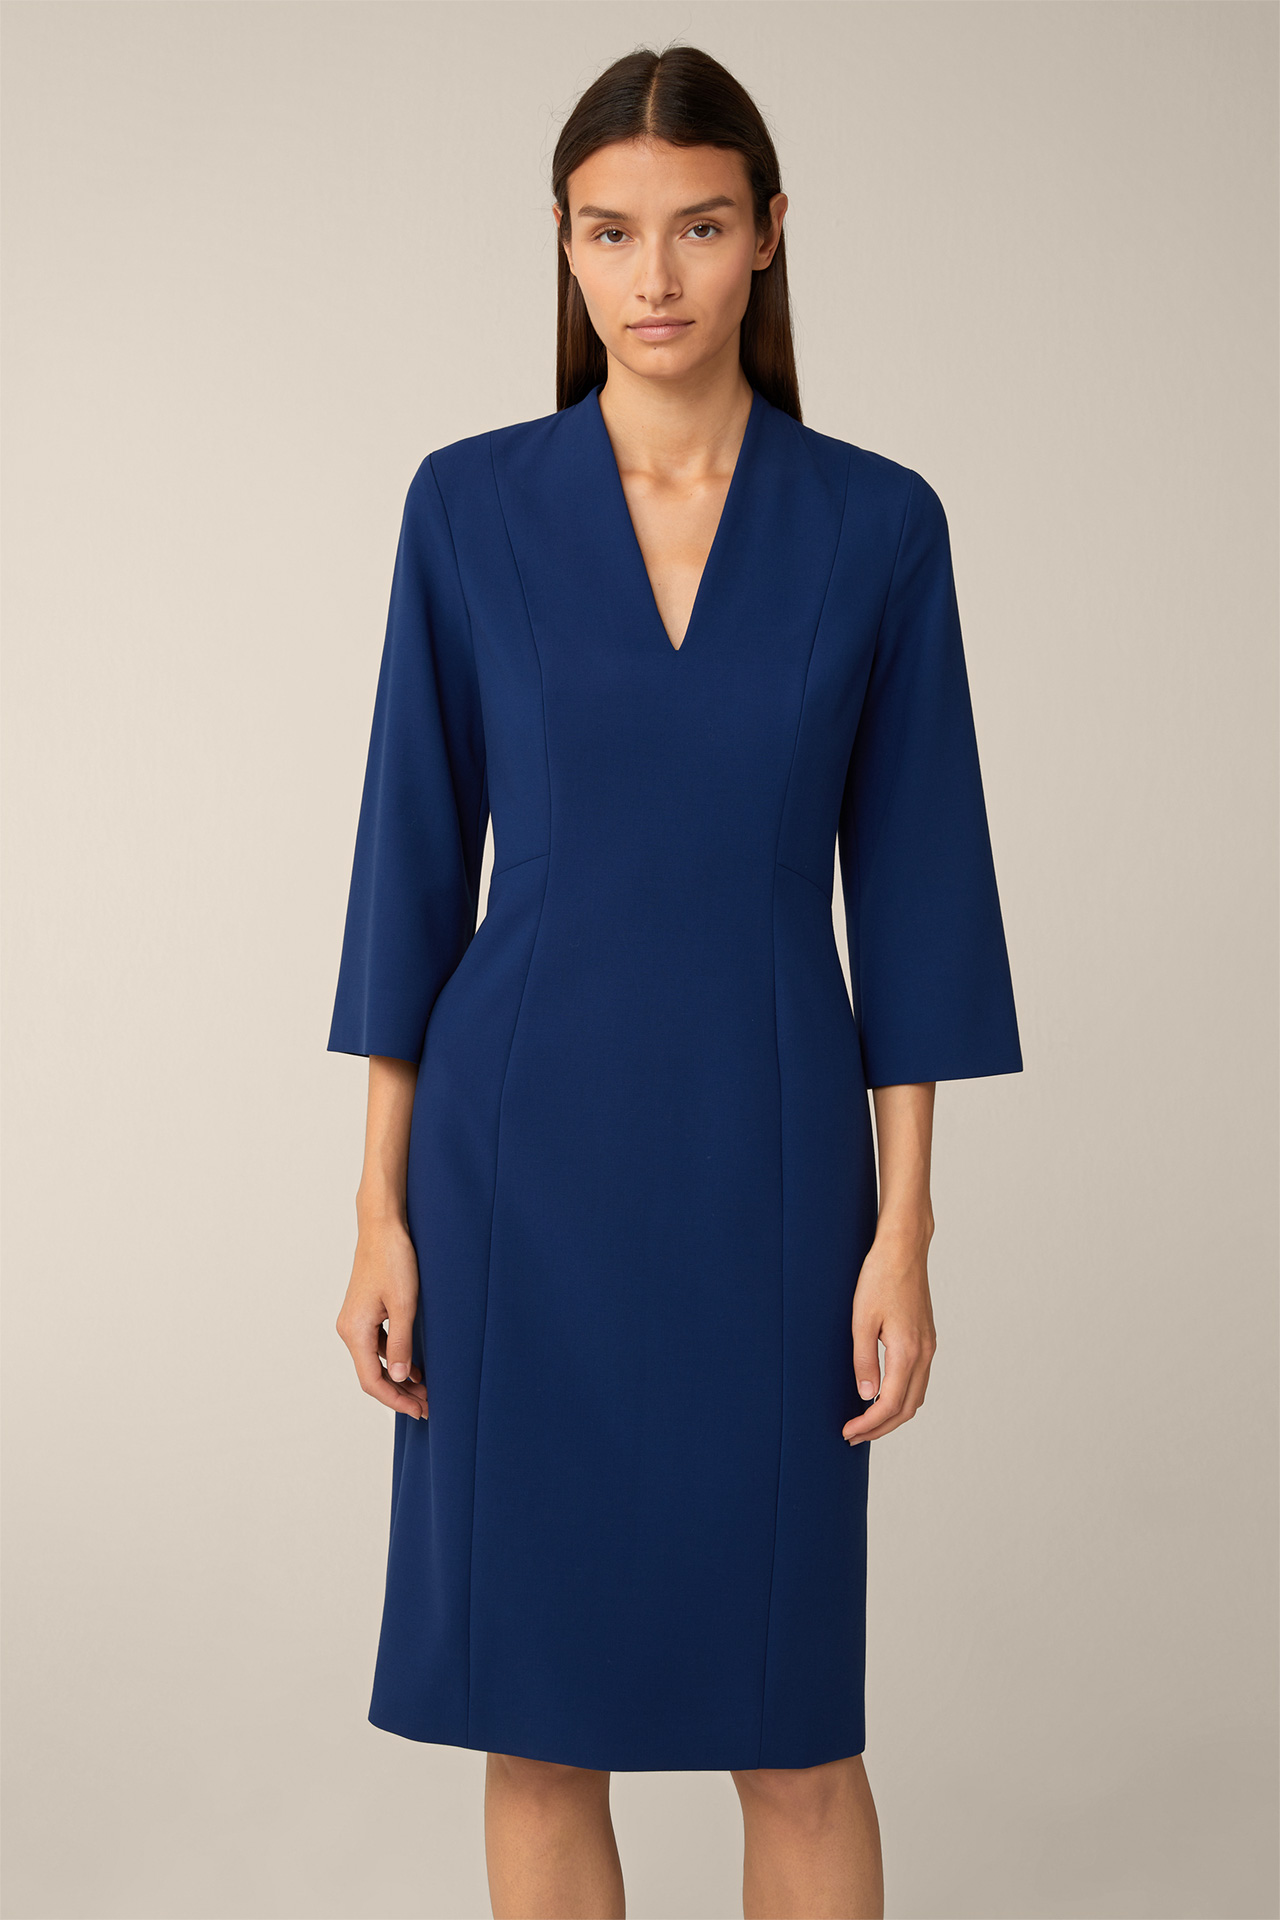 Midi-Length Crêpe Sheath Dress in Blue